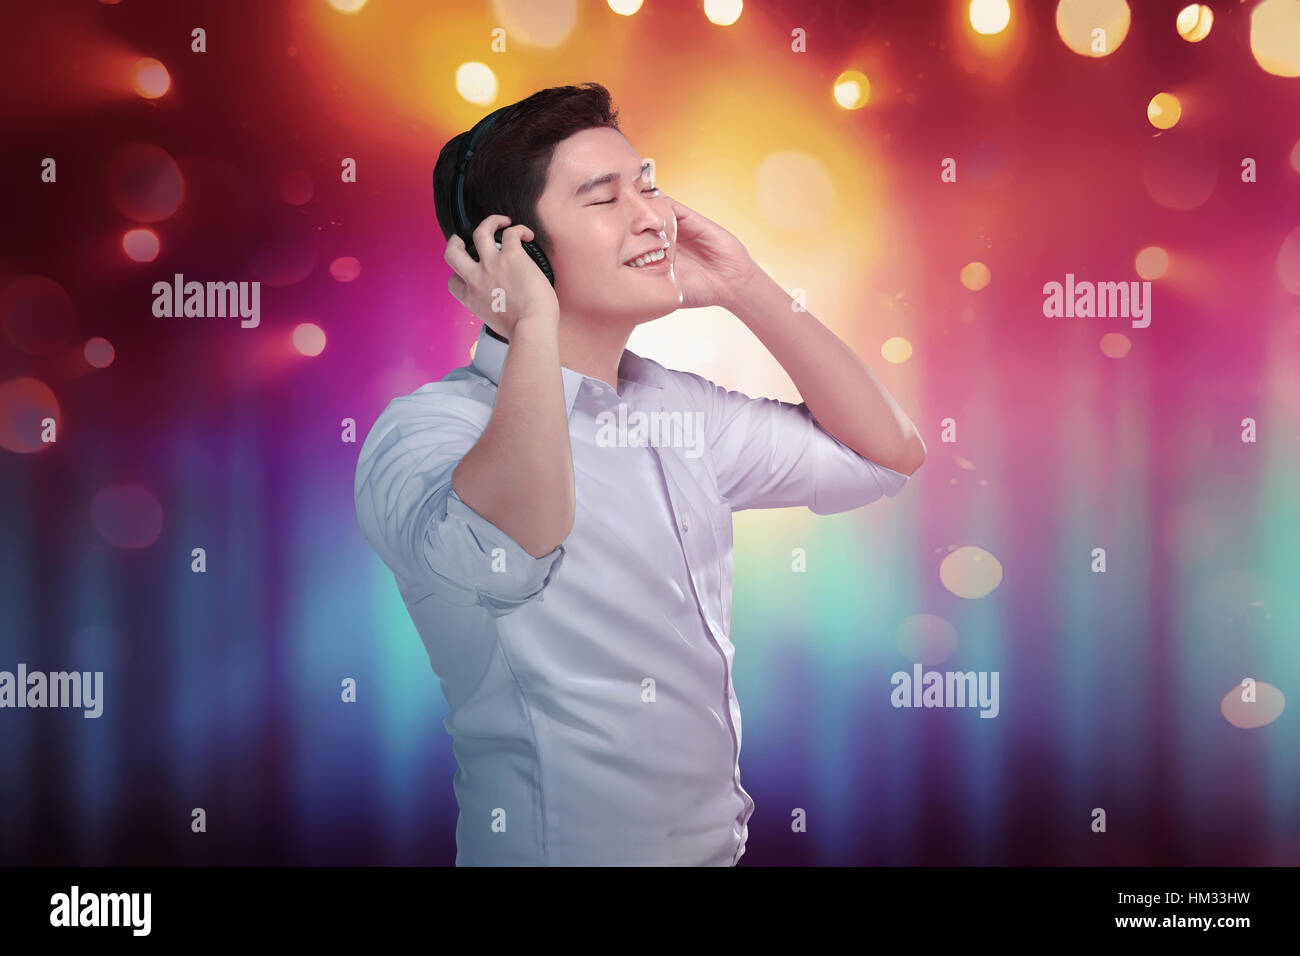 Cheerful asian man enjoying his favorite music in headphones with bokeh background Stock Photo